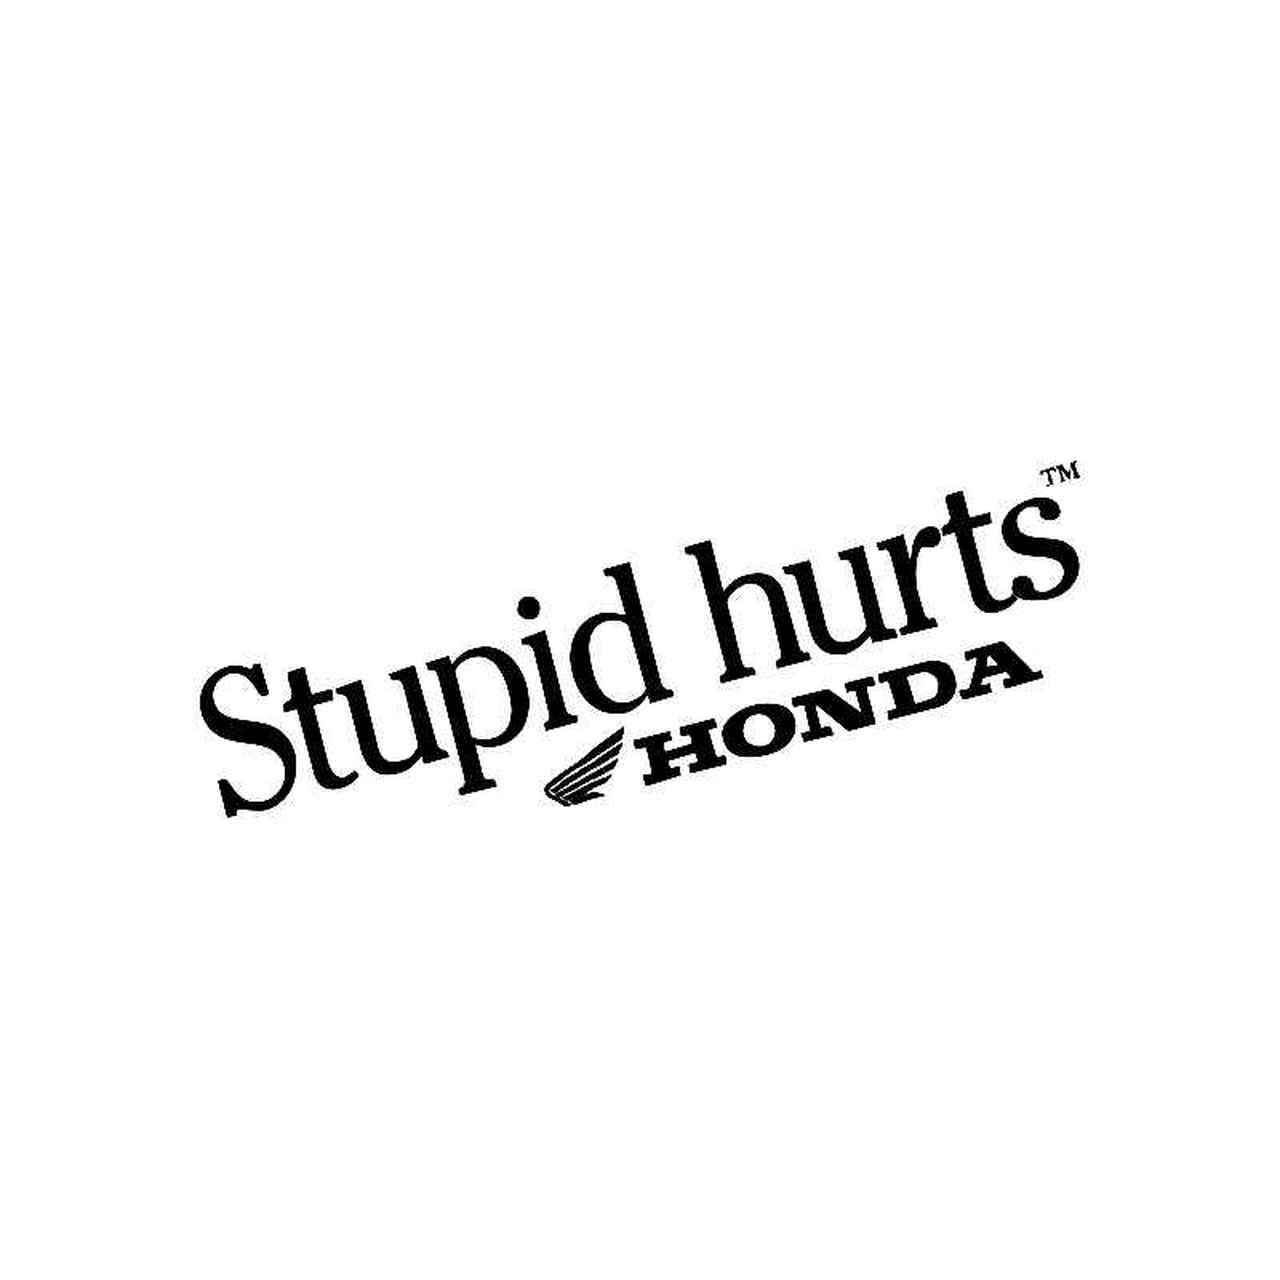 Stupid Logo - Stupid Hurts Logo Jdm Decal